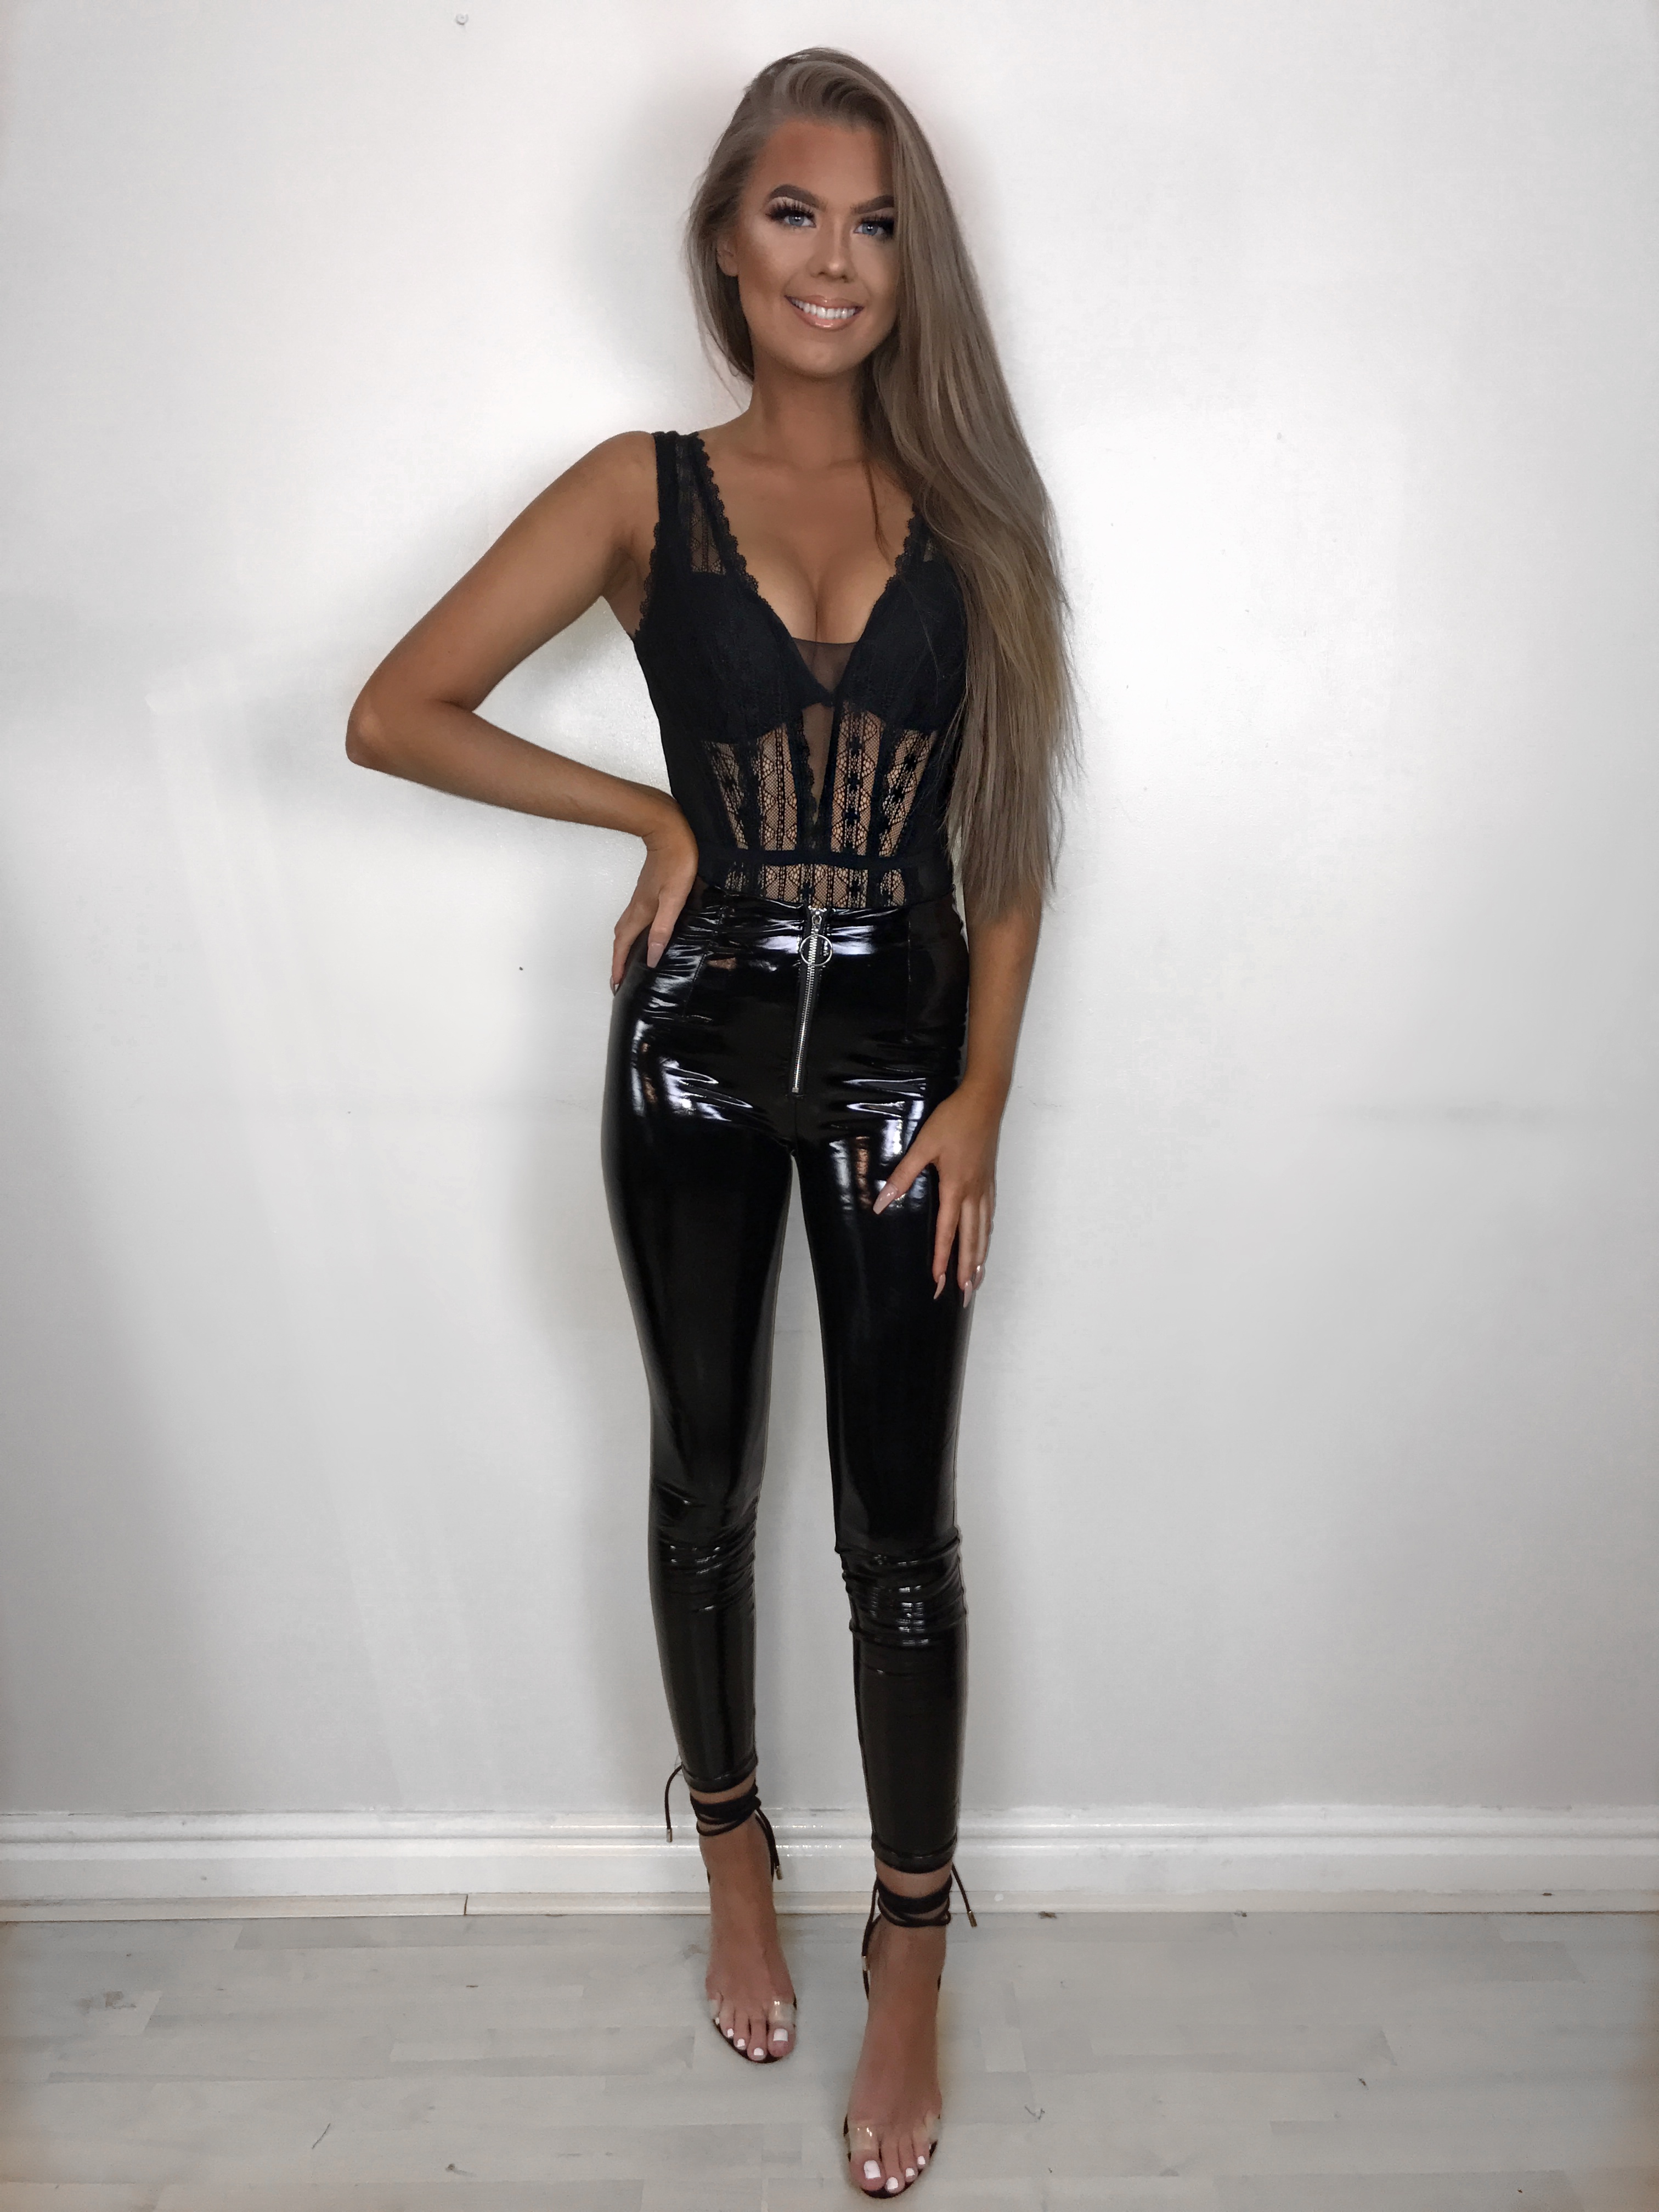 Ciara black lace bodysuit - svlabel.com